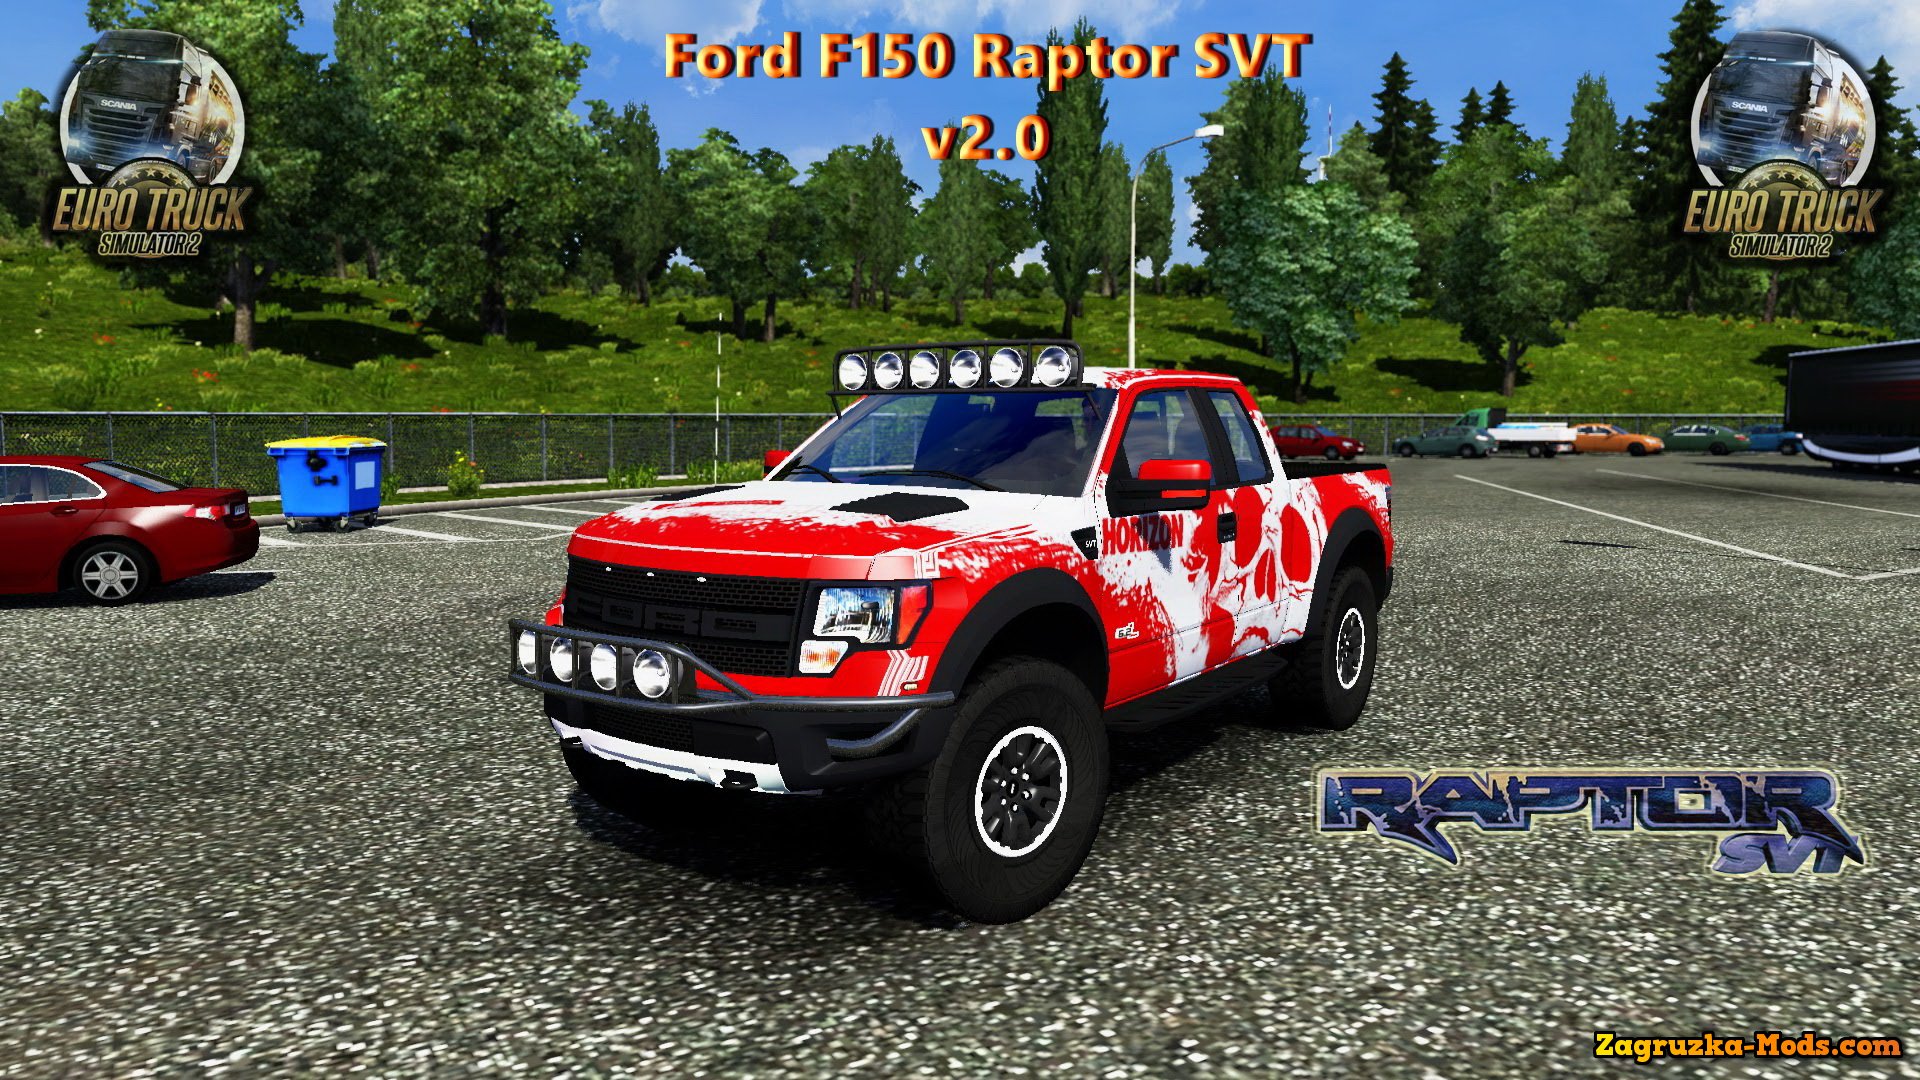 Ford F150 Raptor SVT + Interior v2.0 for ETS 2